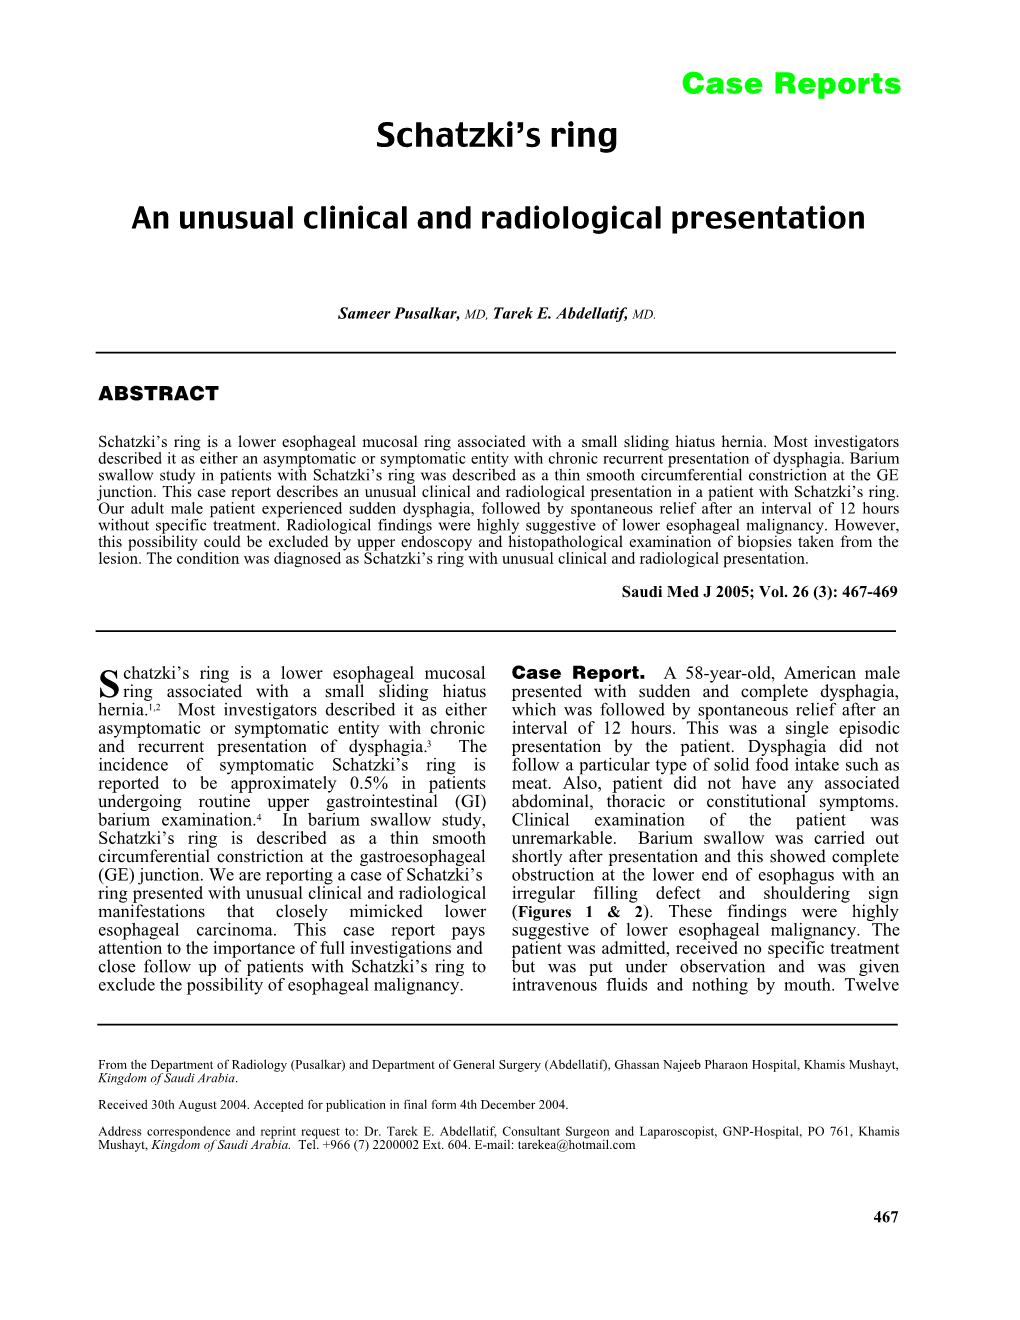 Schatzkis Ring. an Unusual Clinical and Radiological Presentation